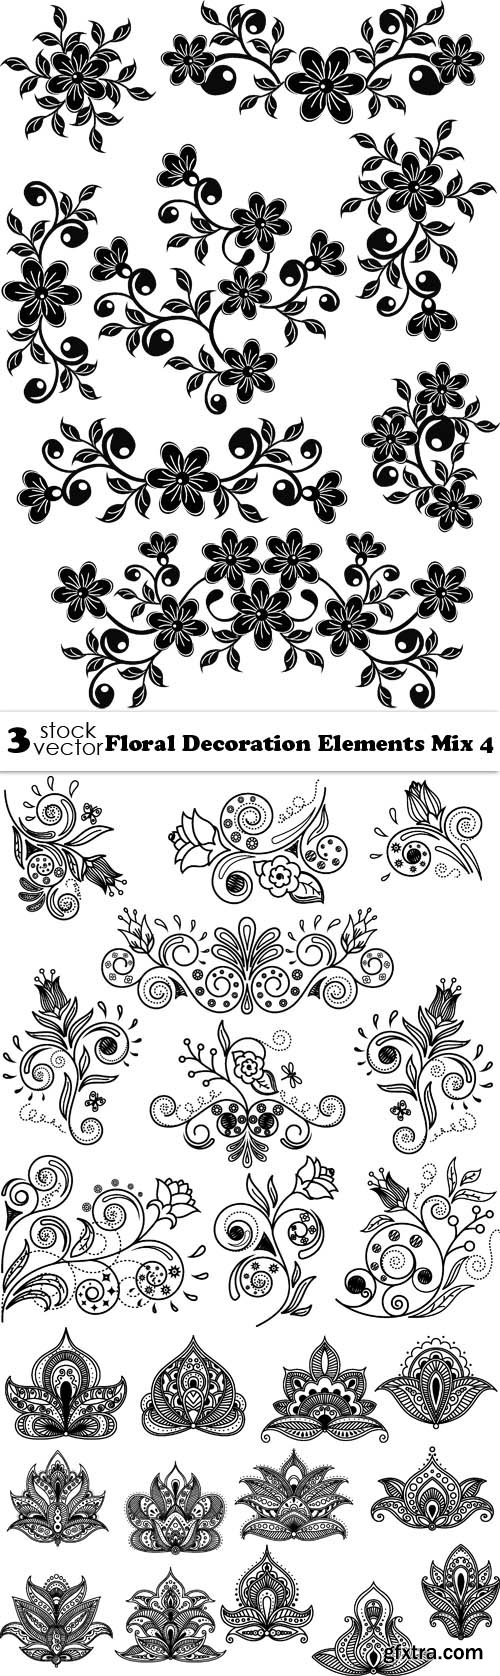 Vectors - Floral Decoration Elements Mix 4